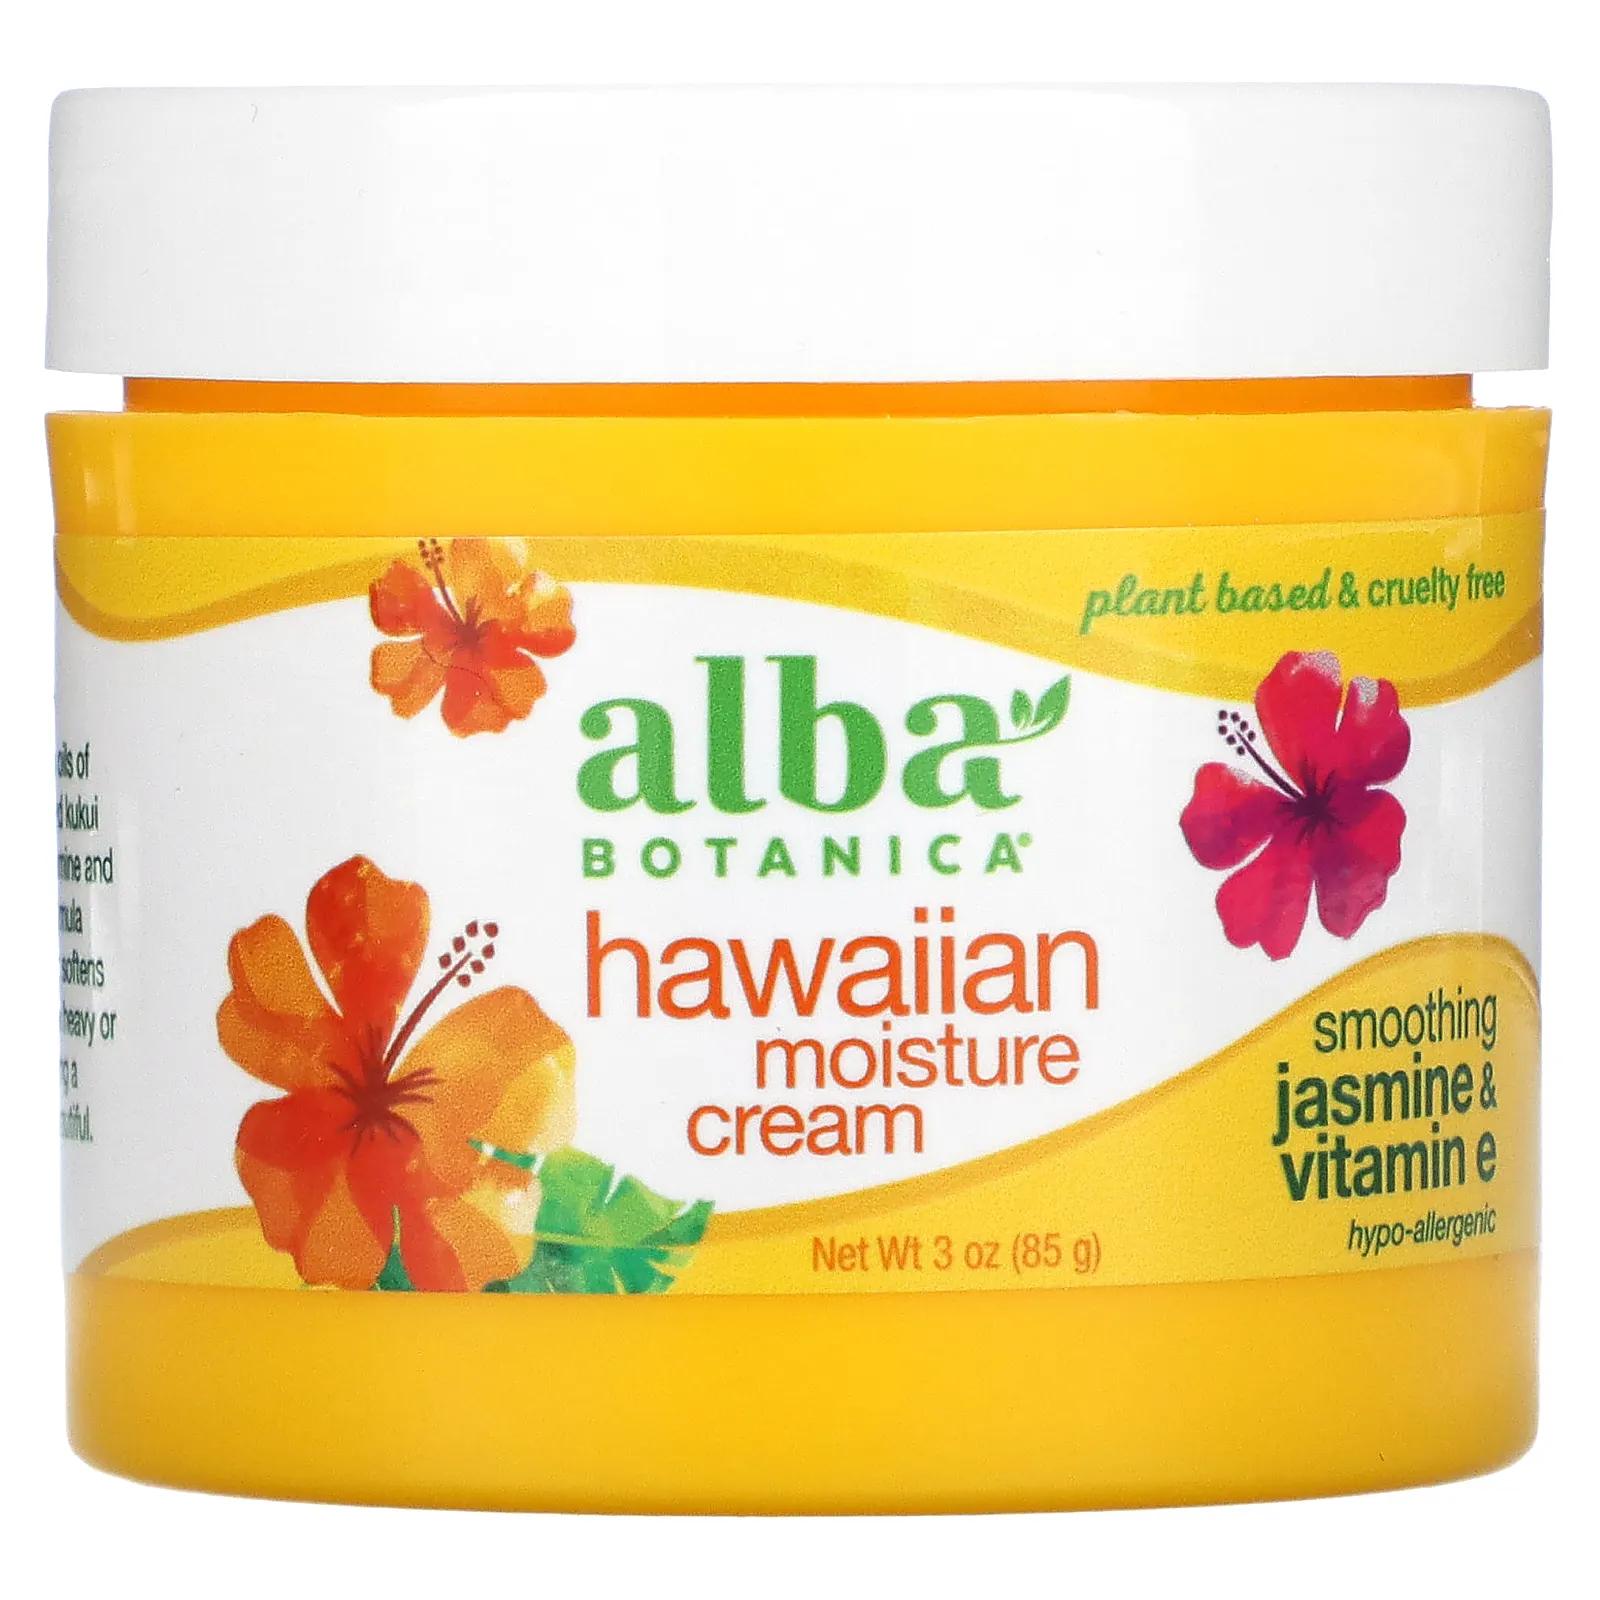 Alba Botanica Hawaiian Moisture Cream увлажняющий крем с жасмином и витамином E 85 г (3 унции) alba botanica sunless tanner 4 oz 113 g